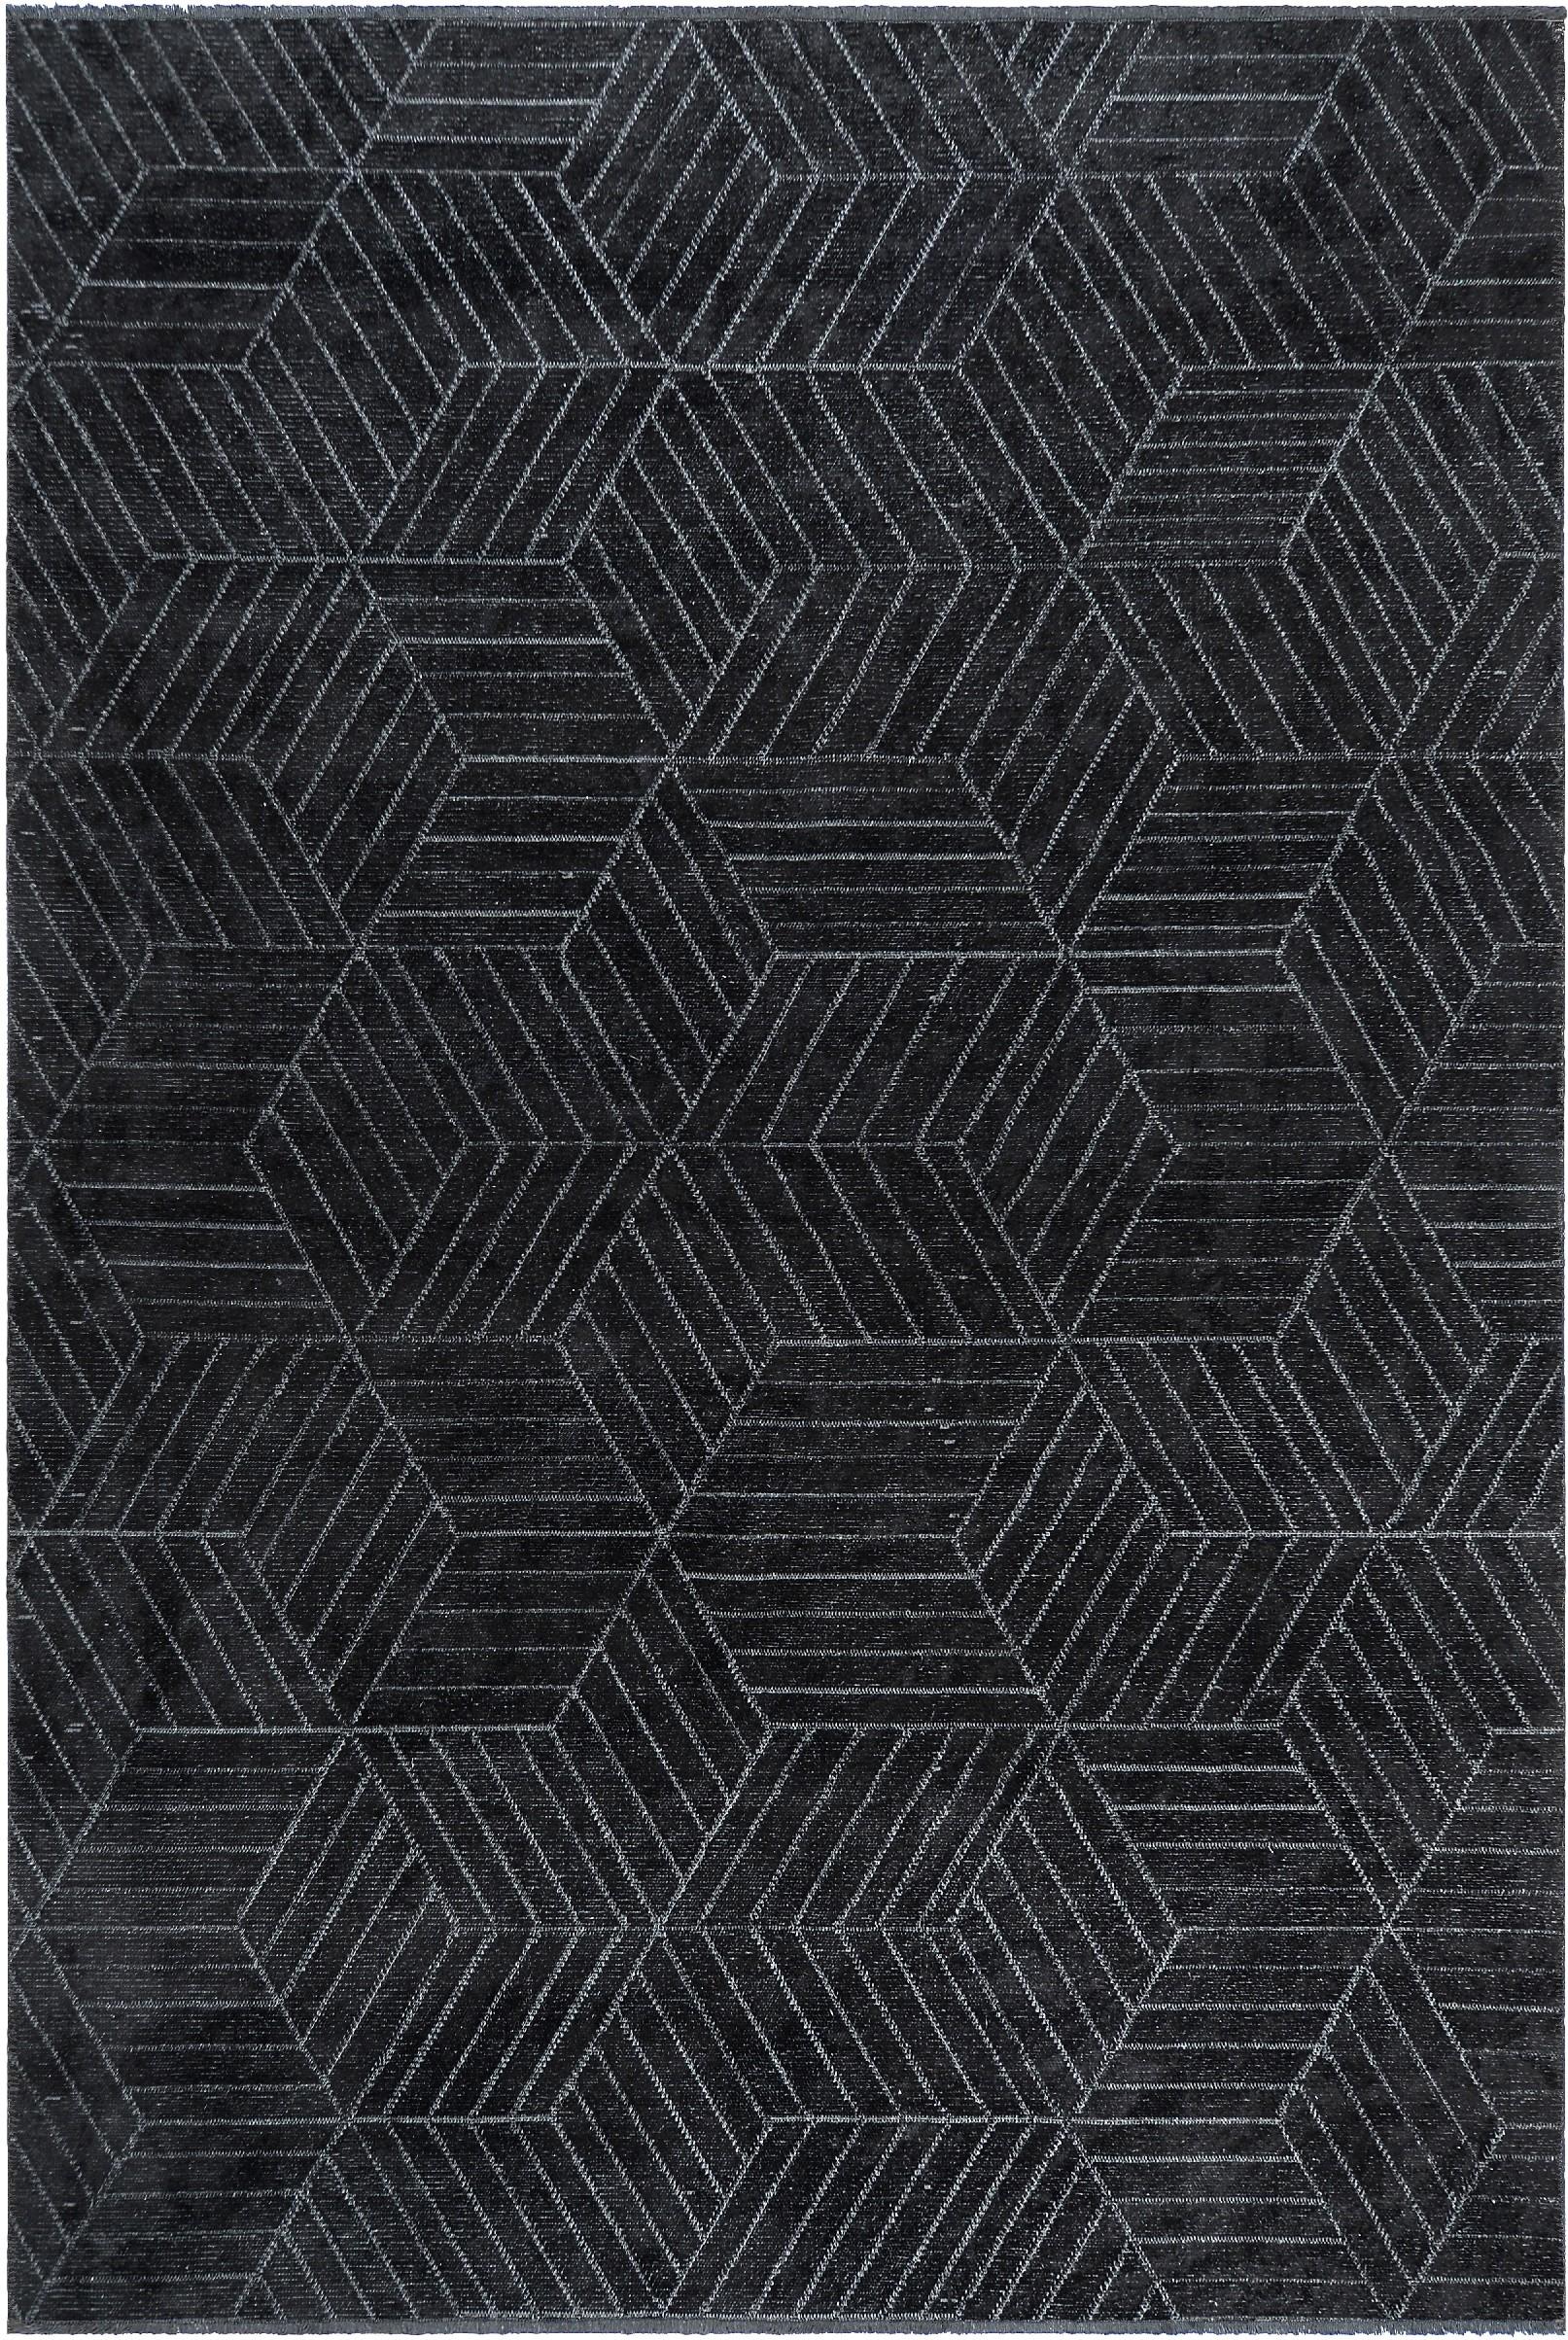 For Sale:  (Black) Modern  Geometric Luxury Hand-Finished Area Rug